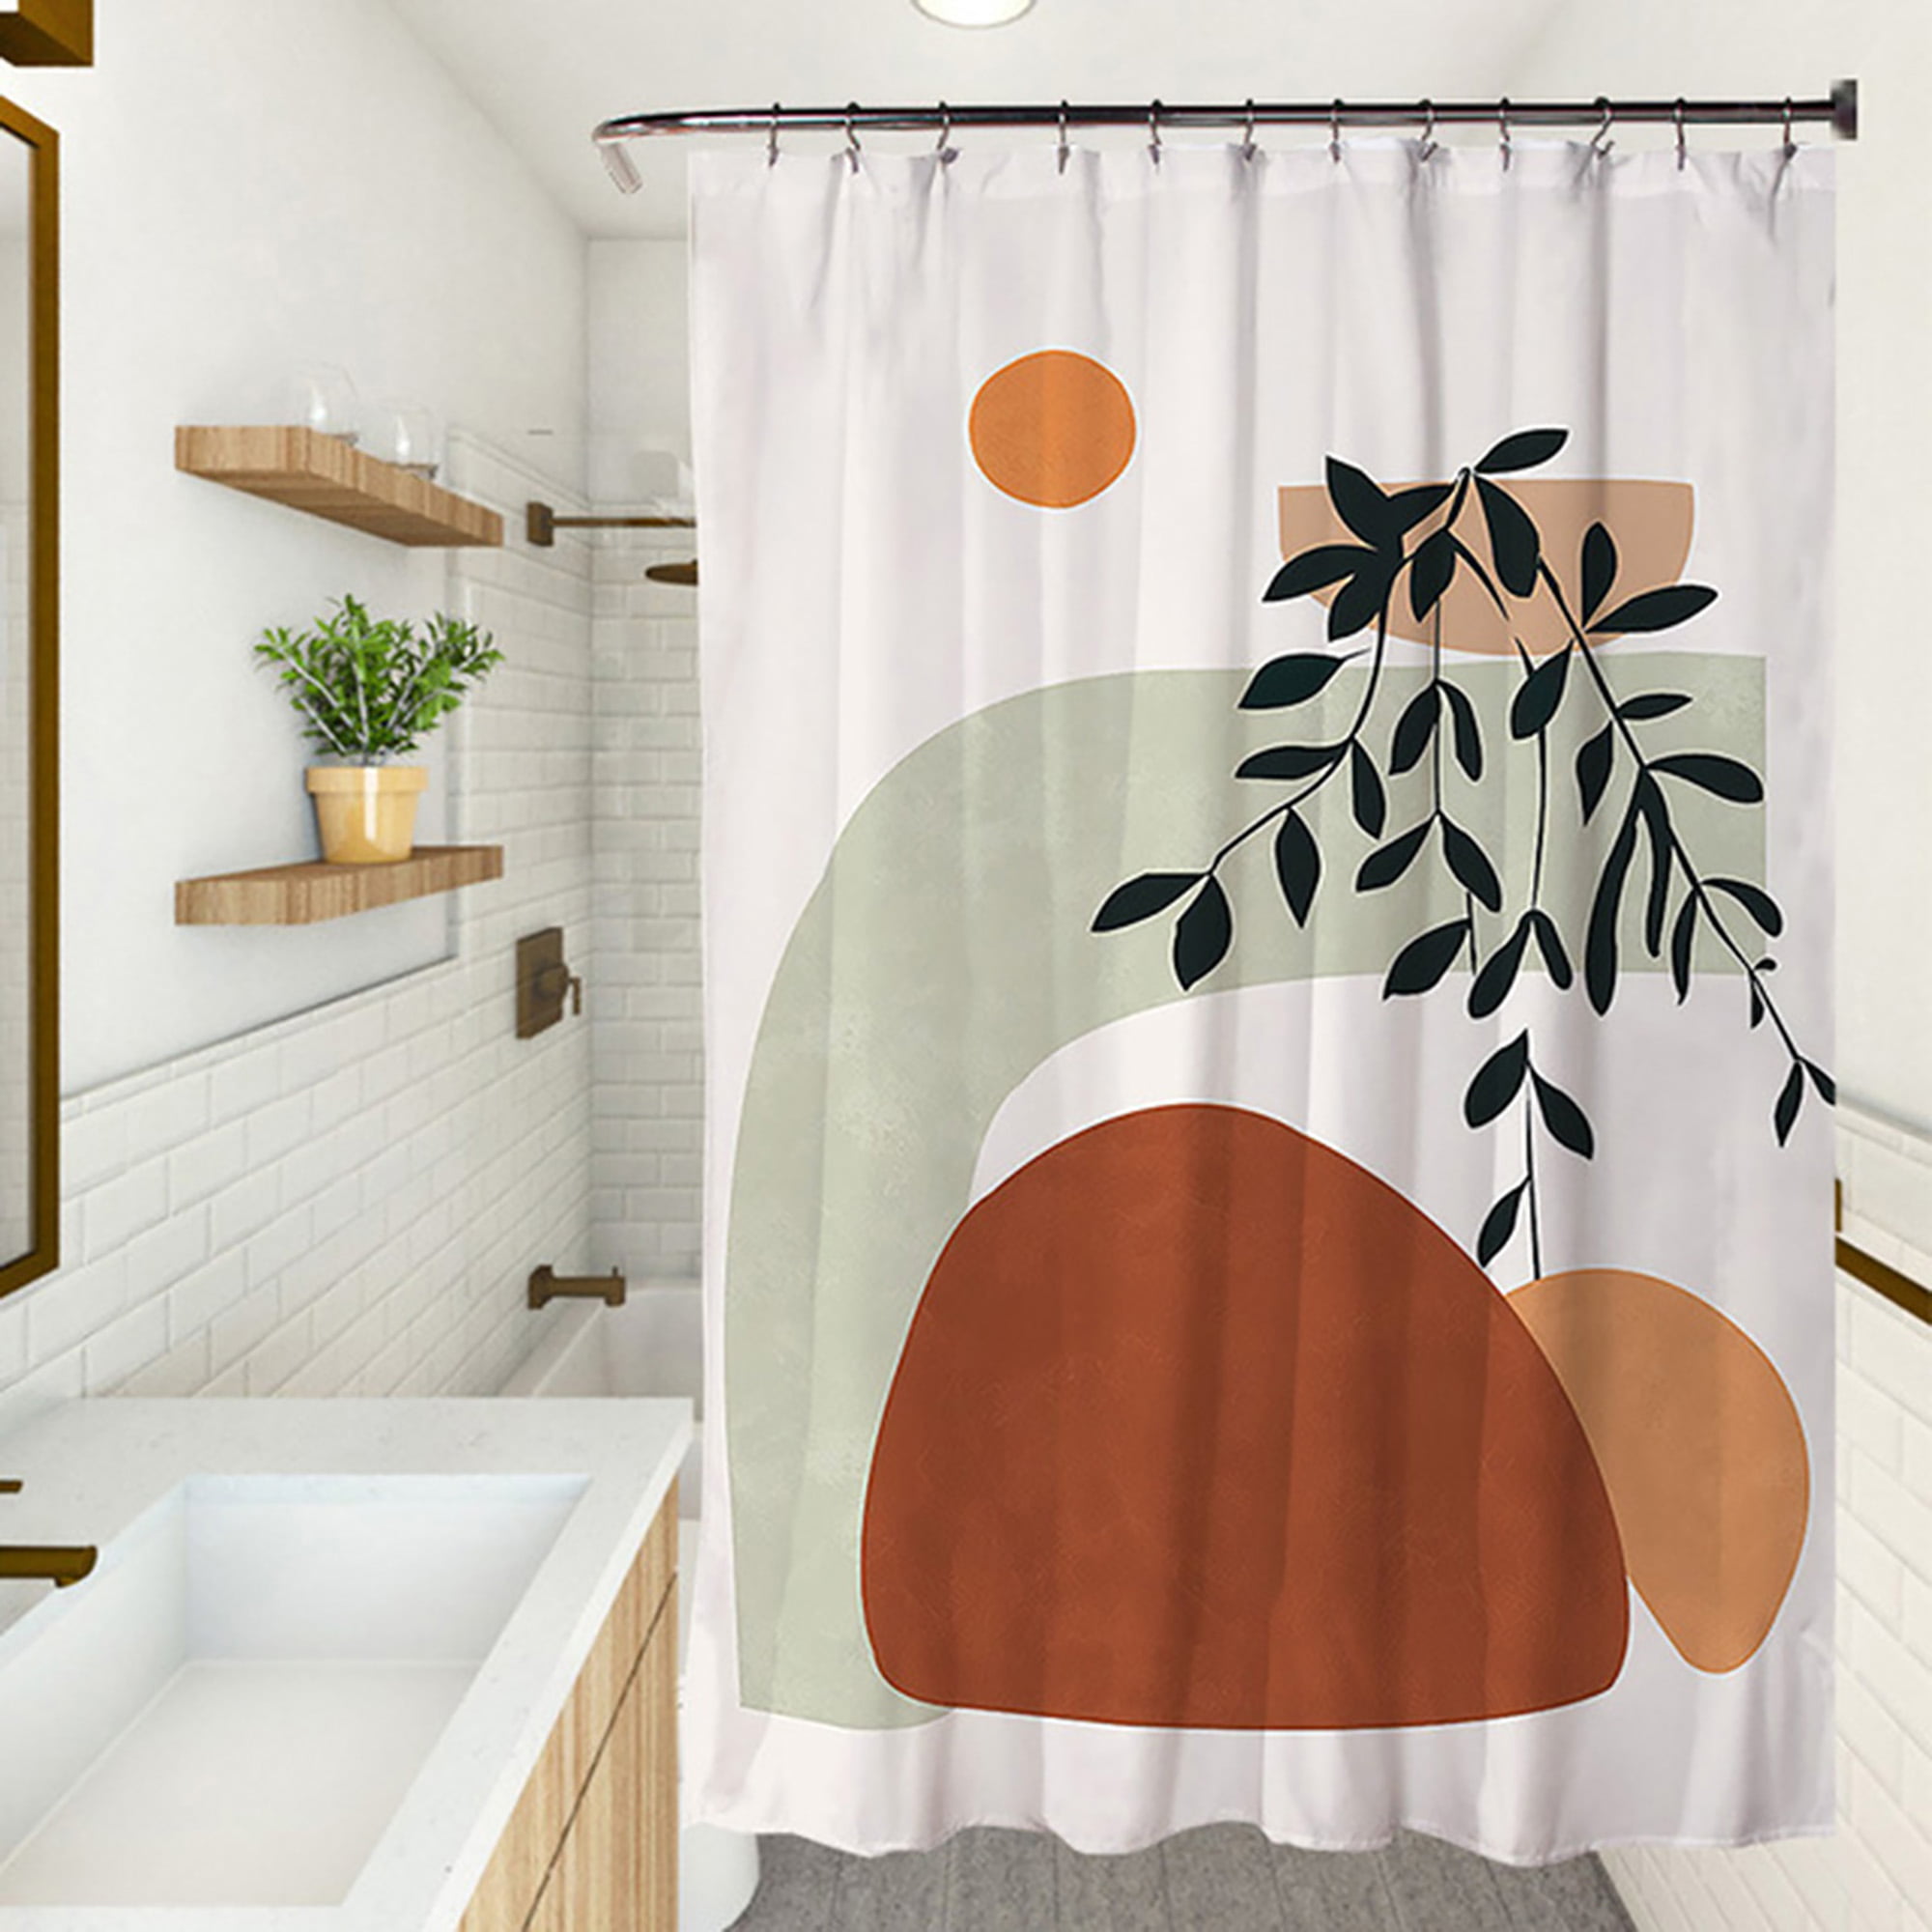 Bohemian Style Abstract Art Waterproof Fabric Bathroom Shower Curtain 12 Hooks 